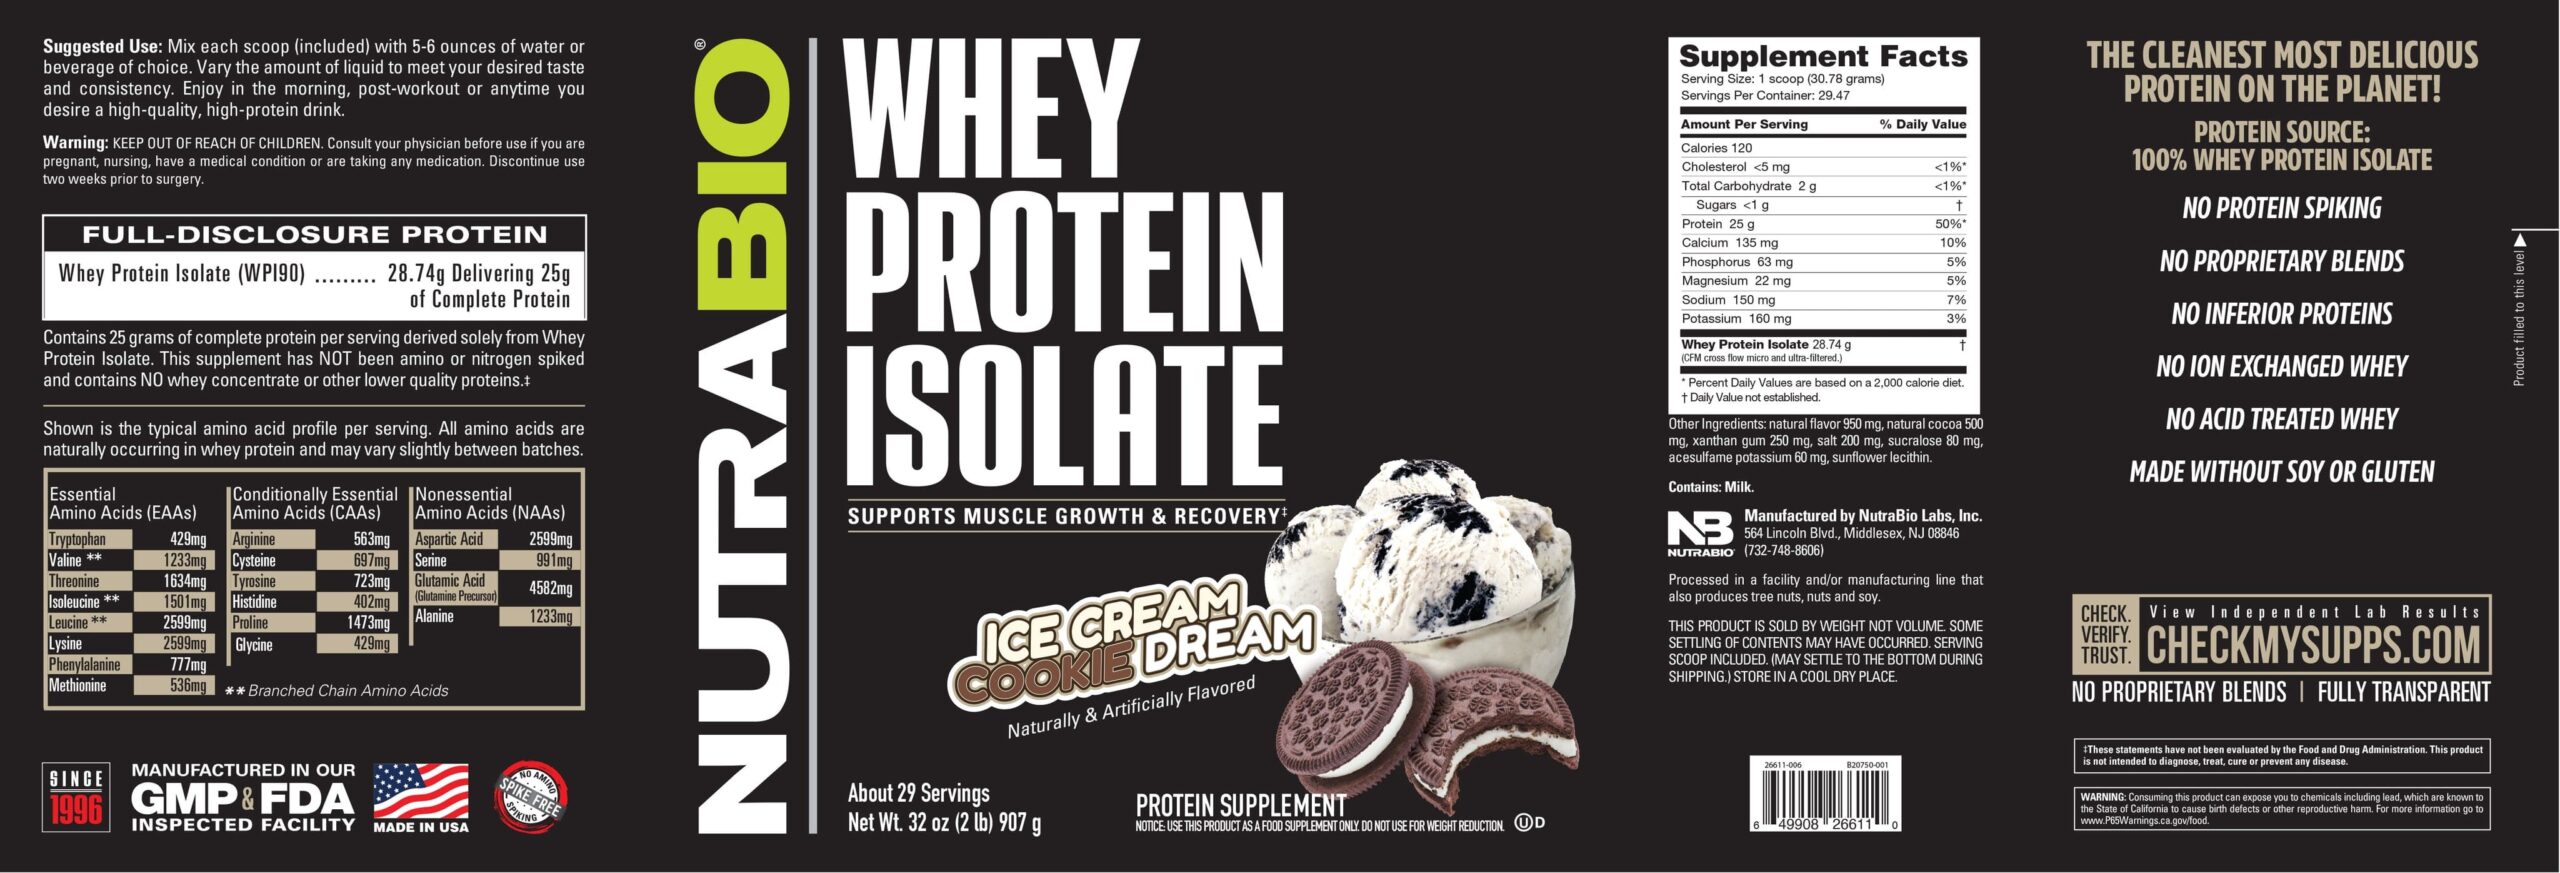 Whey-Protein-Isolate-Ice-Cream-Cookie-Dream-label-en-scaled-1.jpg